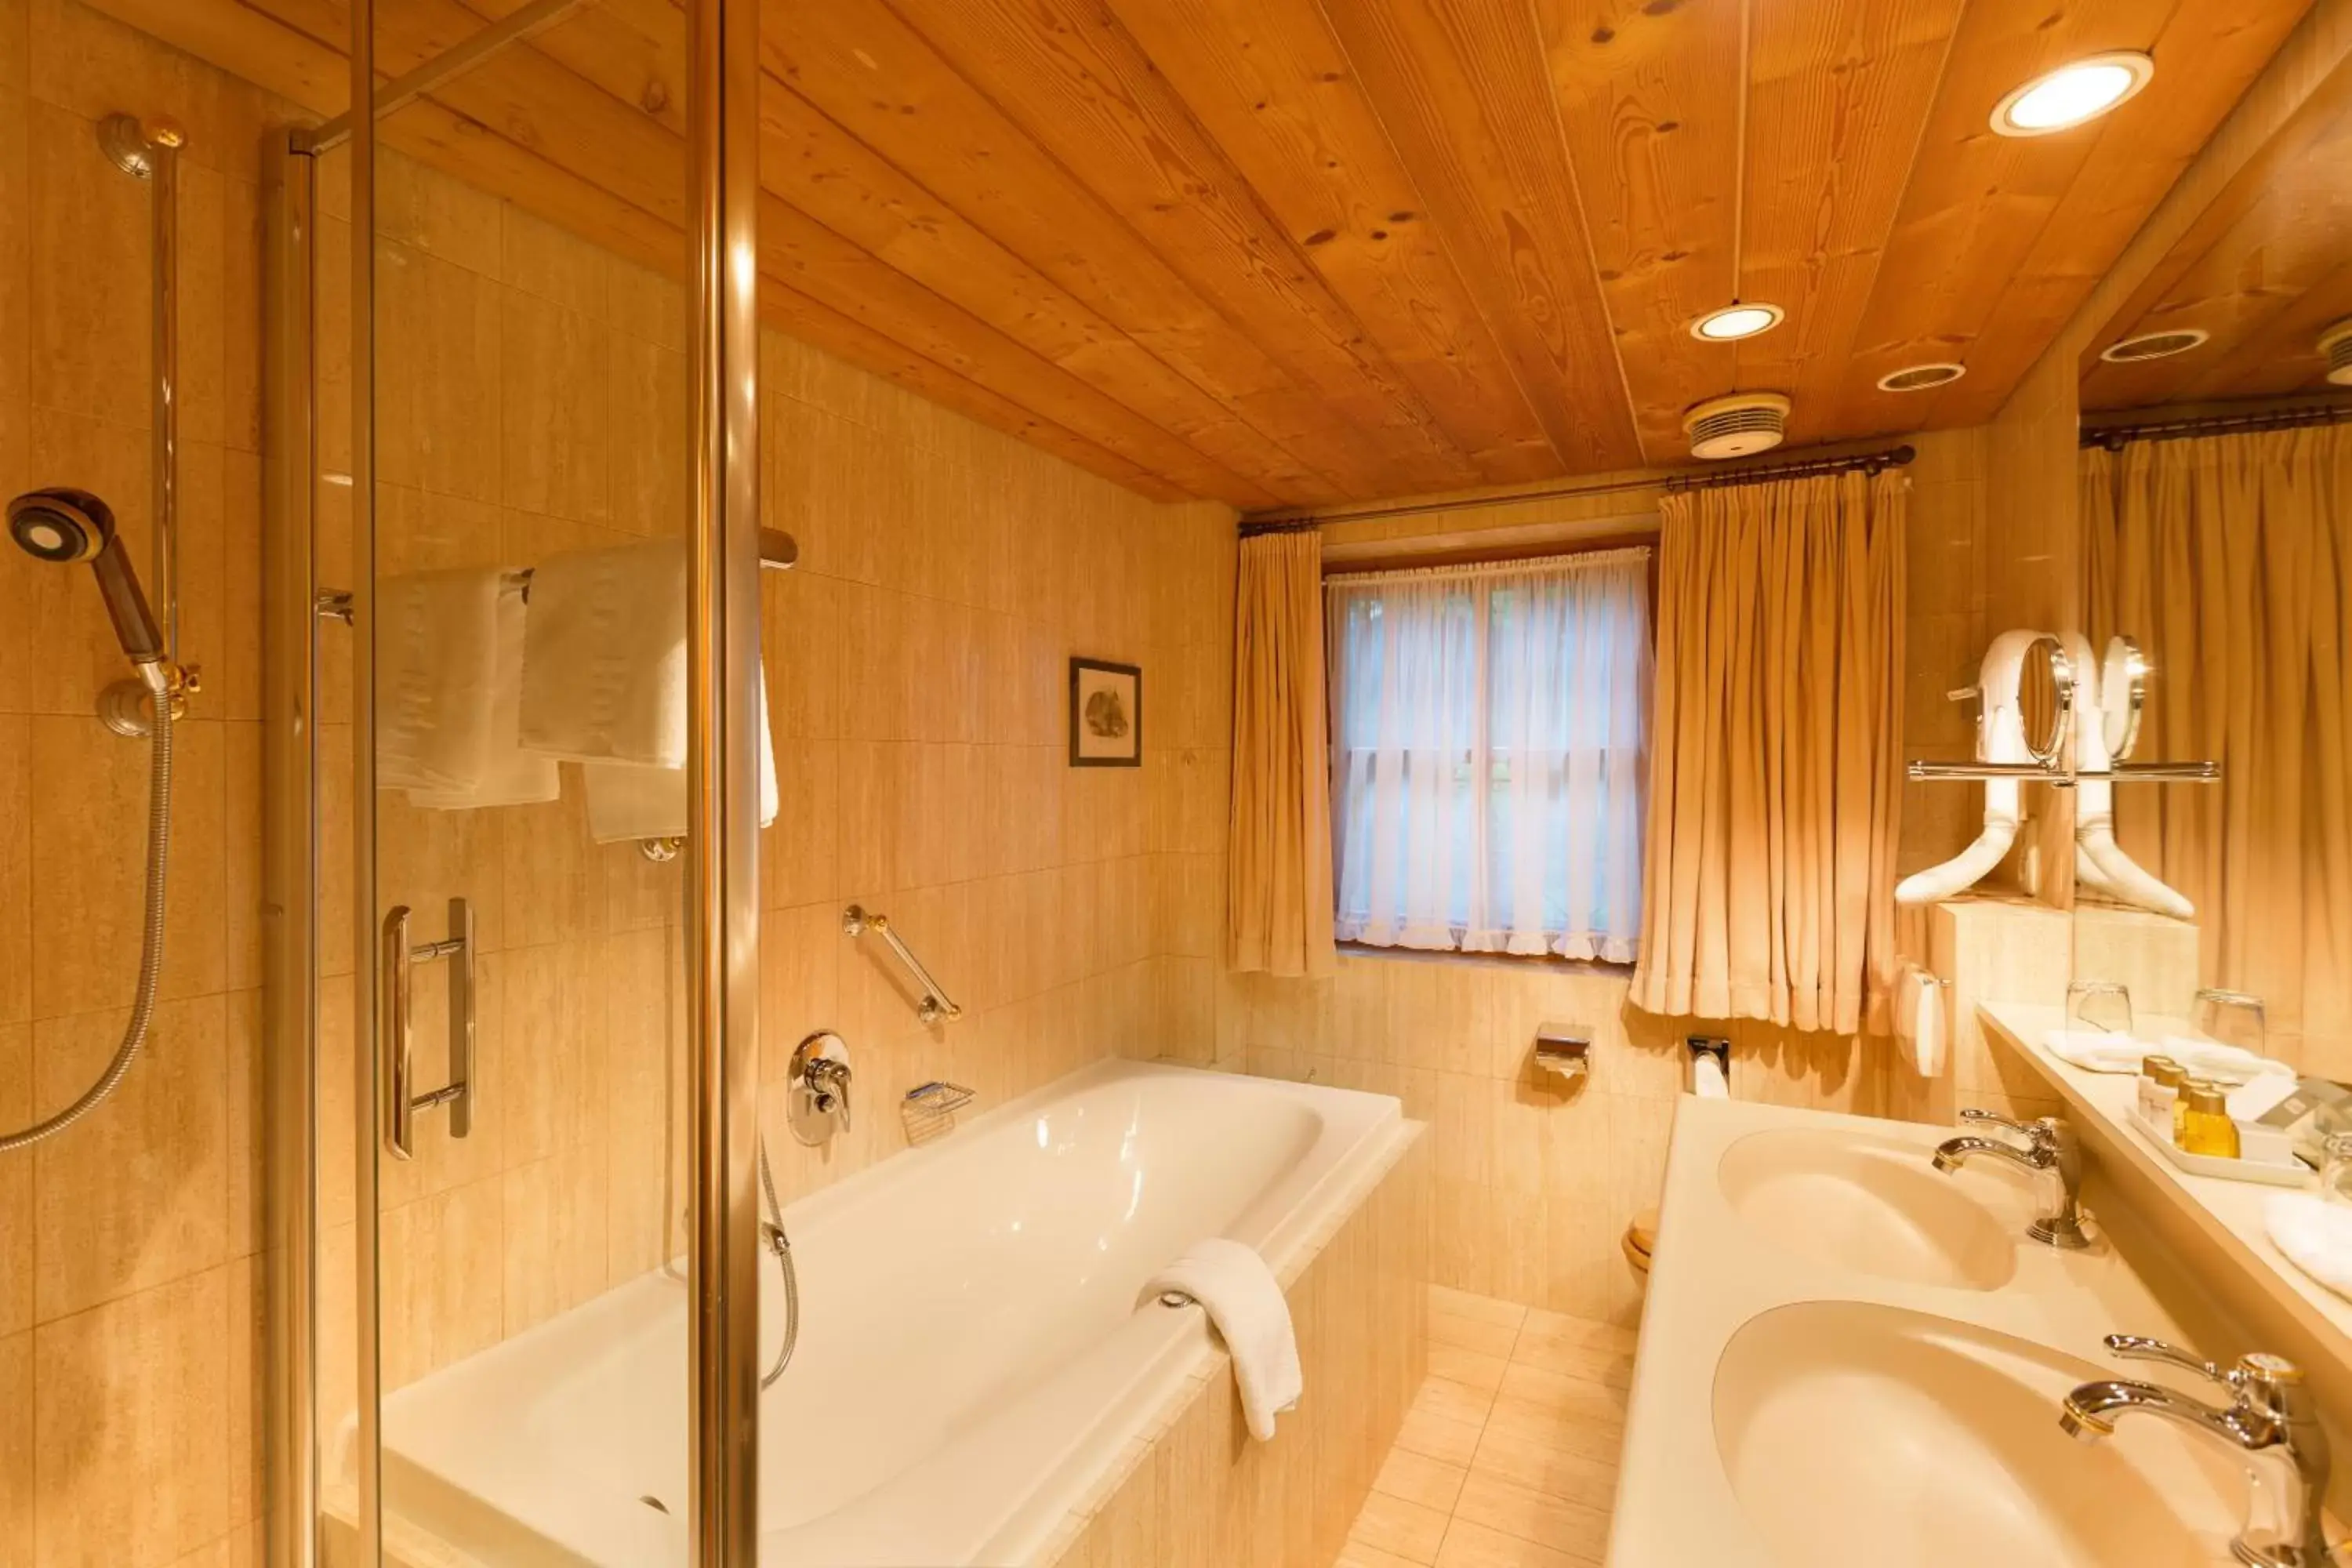 Photo of the whole room, Bathroom in Reindl's Partenkirchener Hof